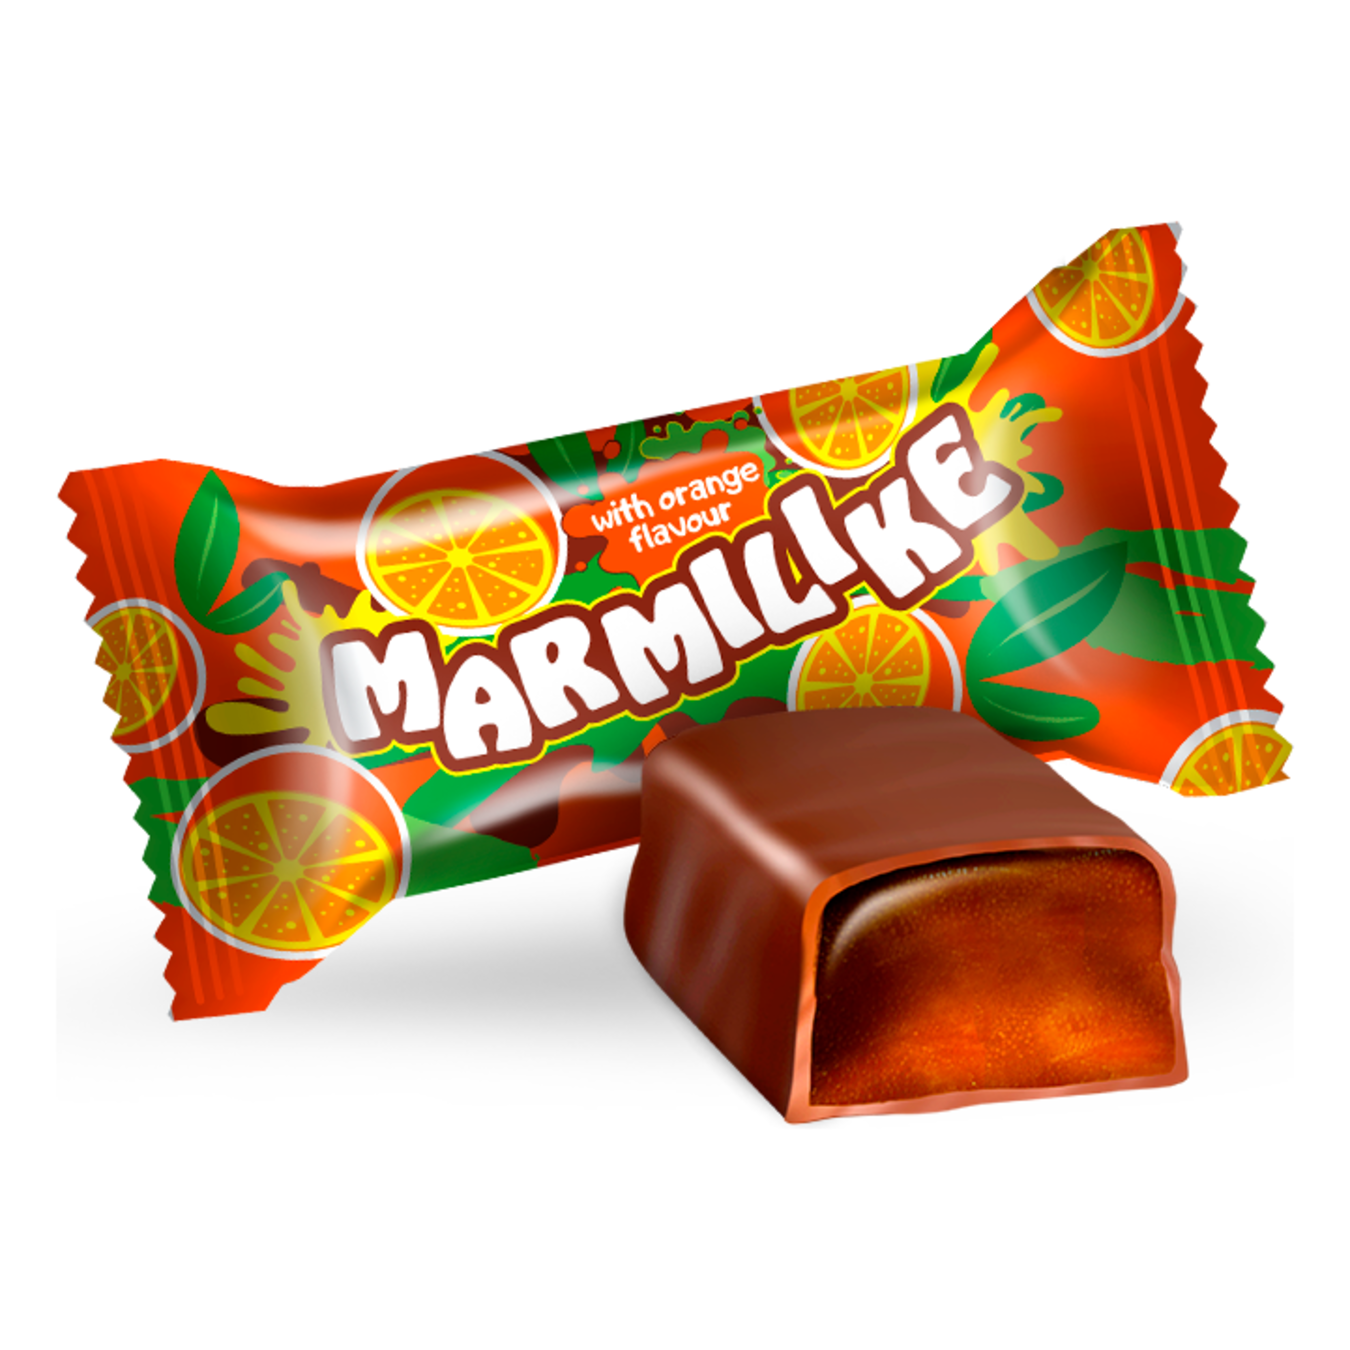 Lucas Marmilike candies with orange flavor